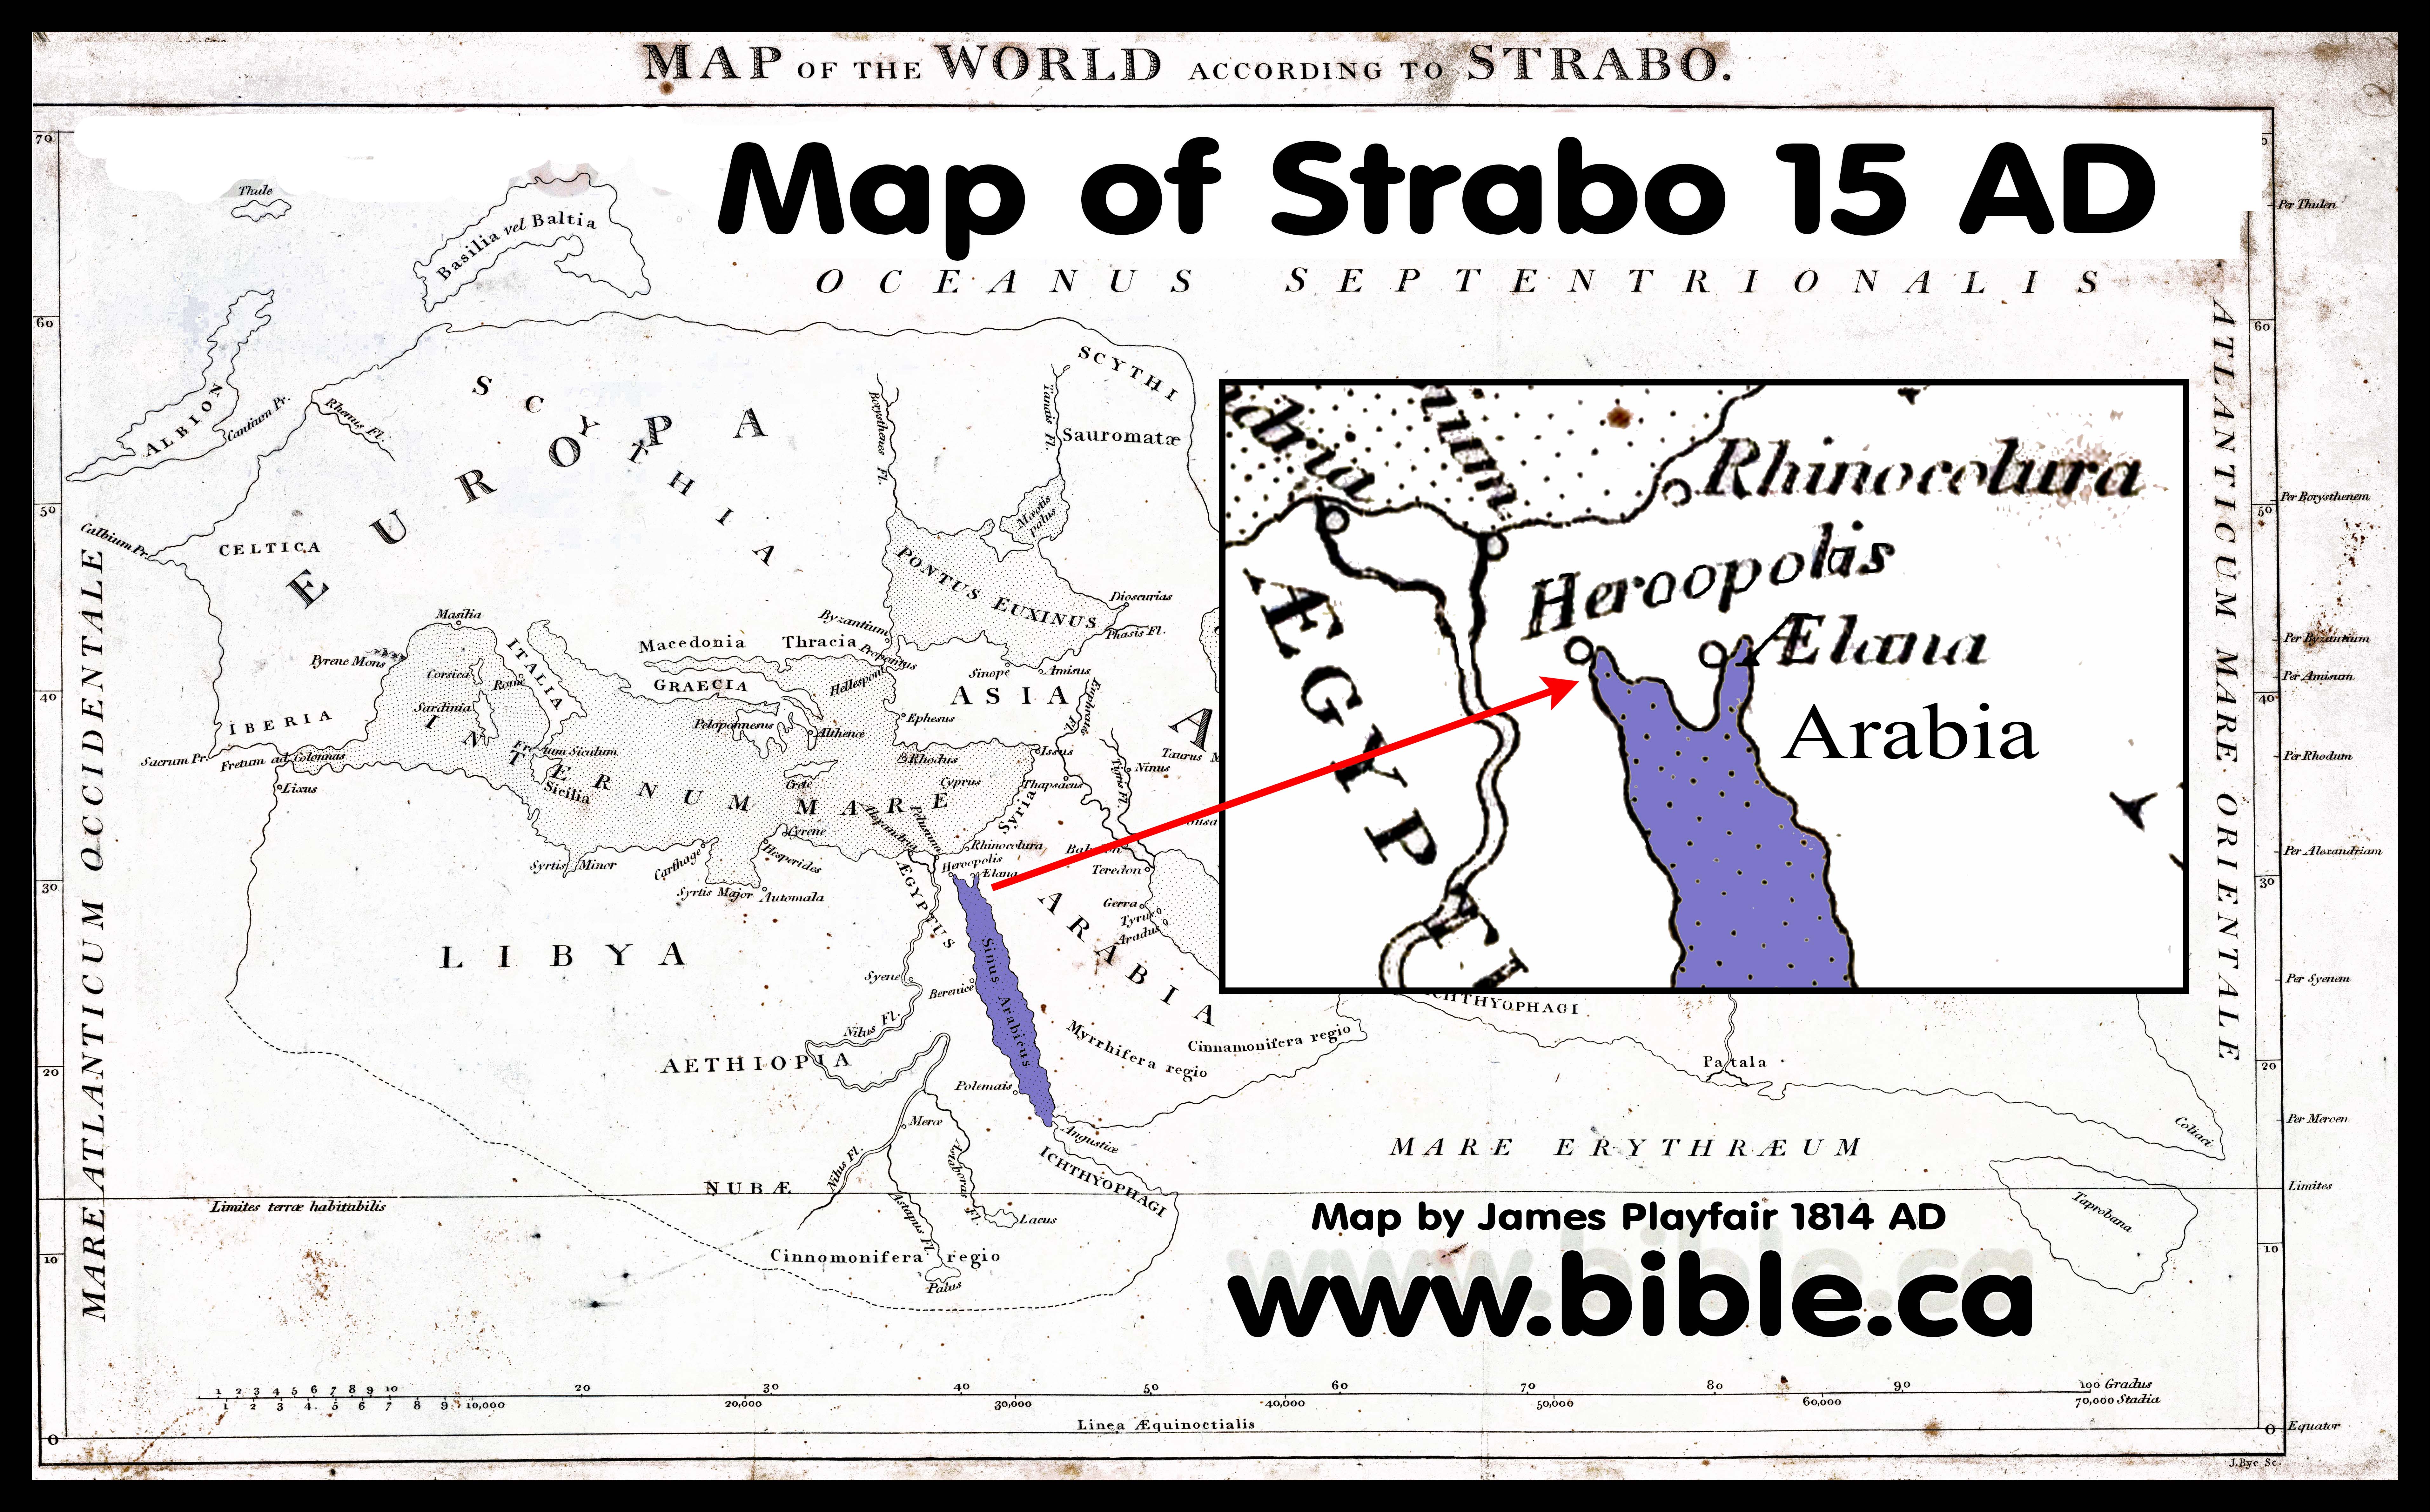 http://www.bible.ca/archeology/maps-bible-archeology-exodus-ancient-geographers-strabo-maps-15ad.jpg